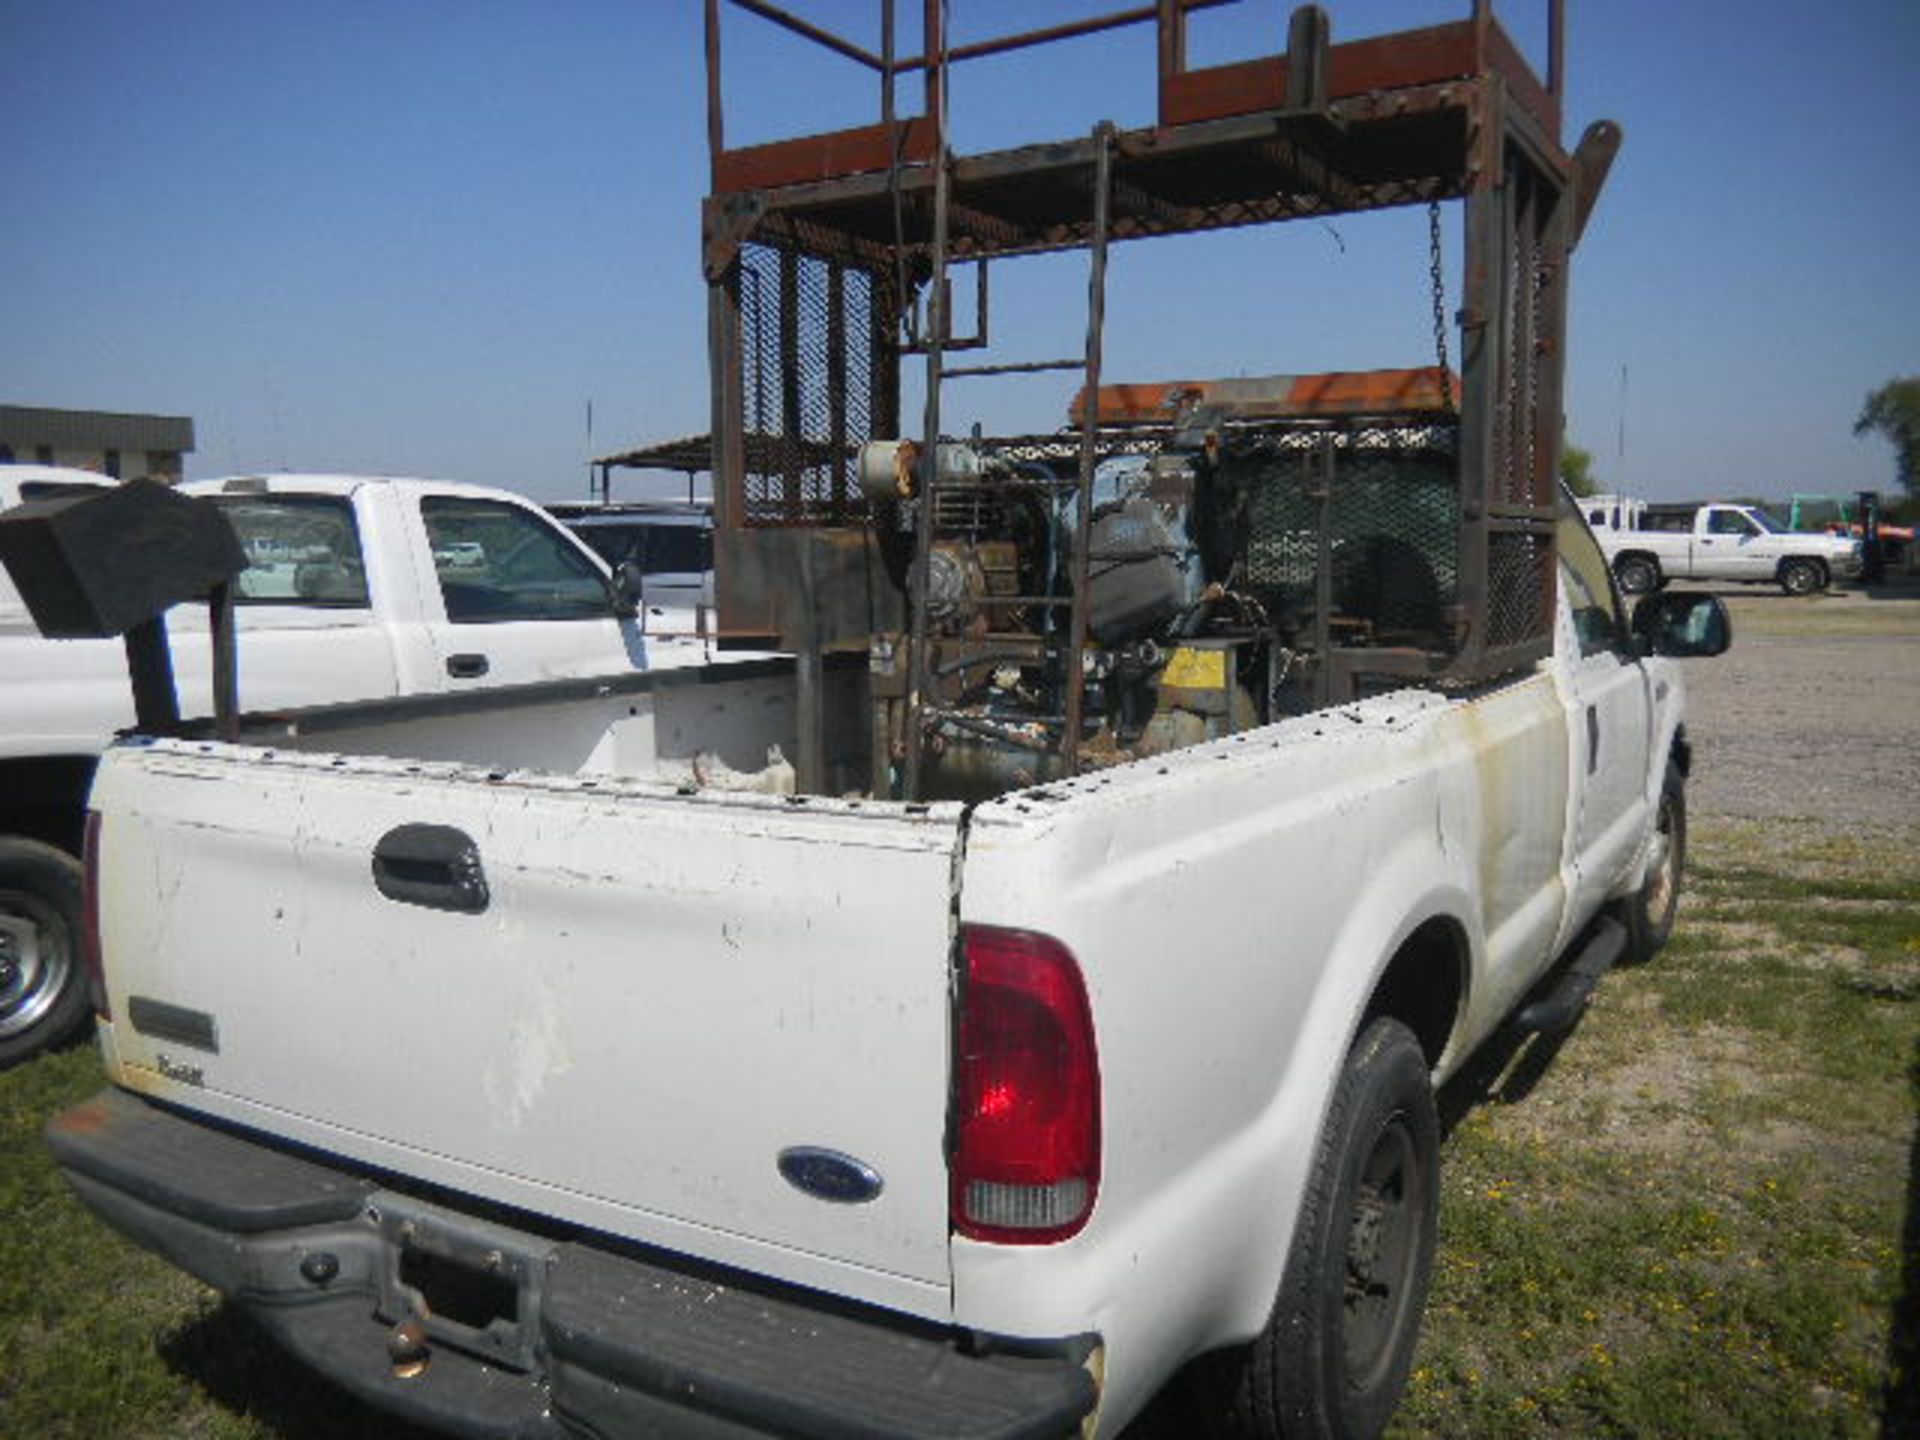 2006 Ford F250 "Sign Truck" With Metal Rack & Compressor - Asset I.D. #945 - Last of Vin (D90999) - Image 4 of 8